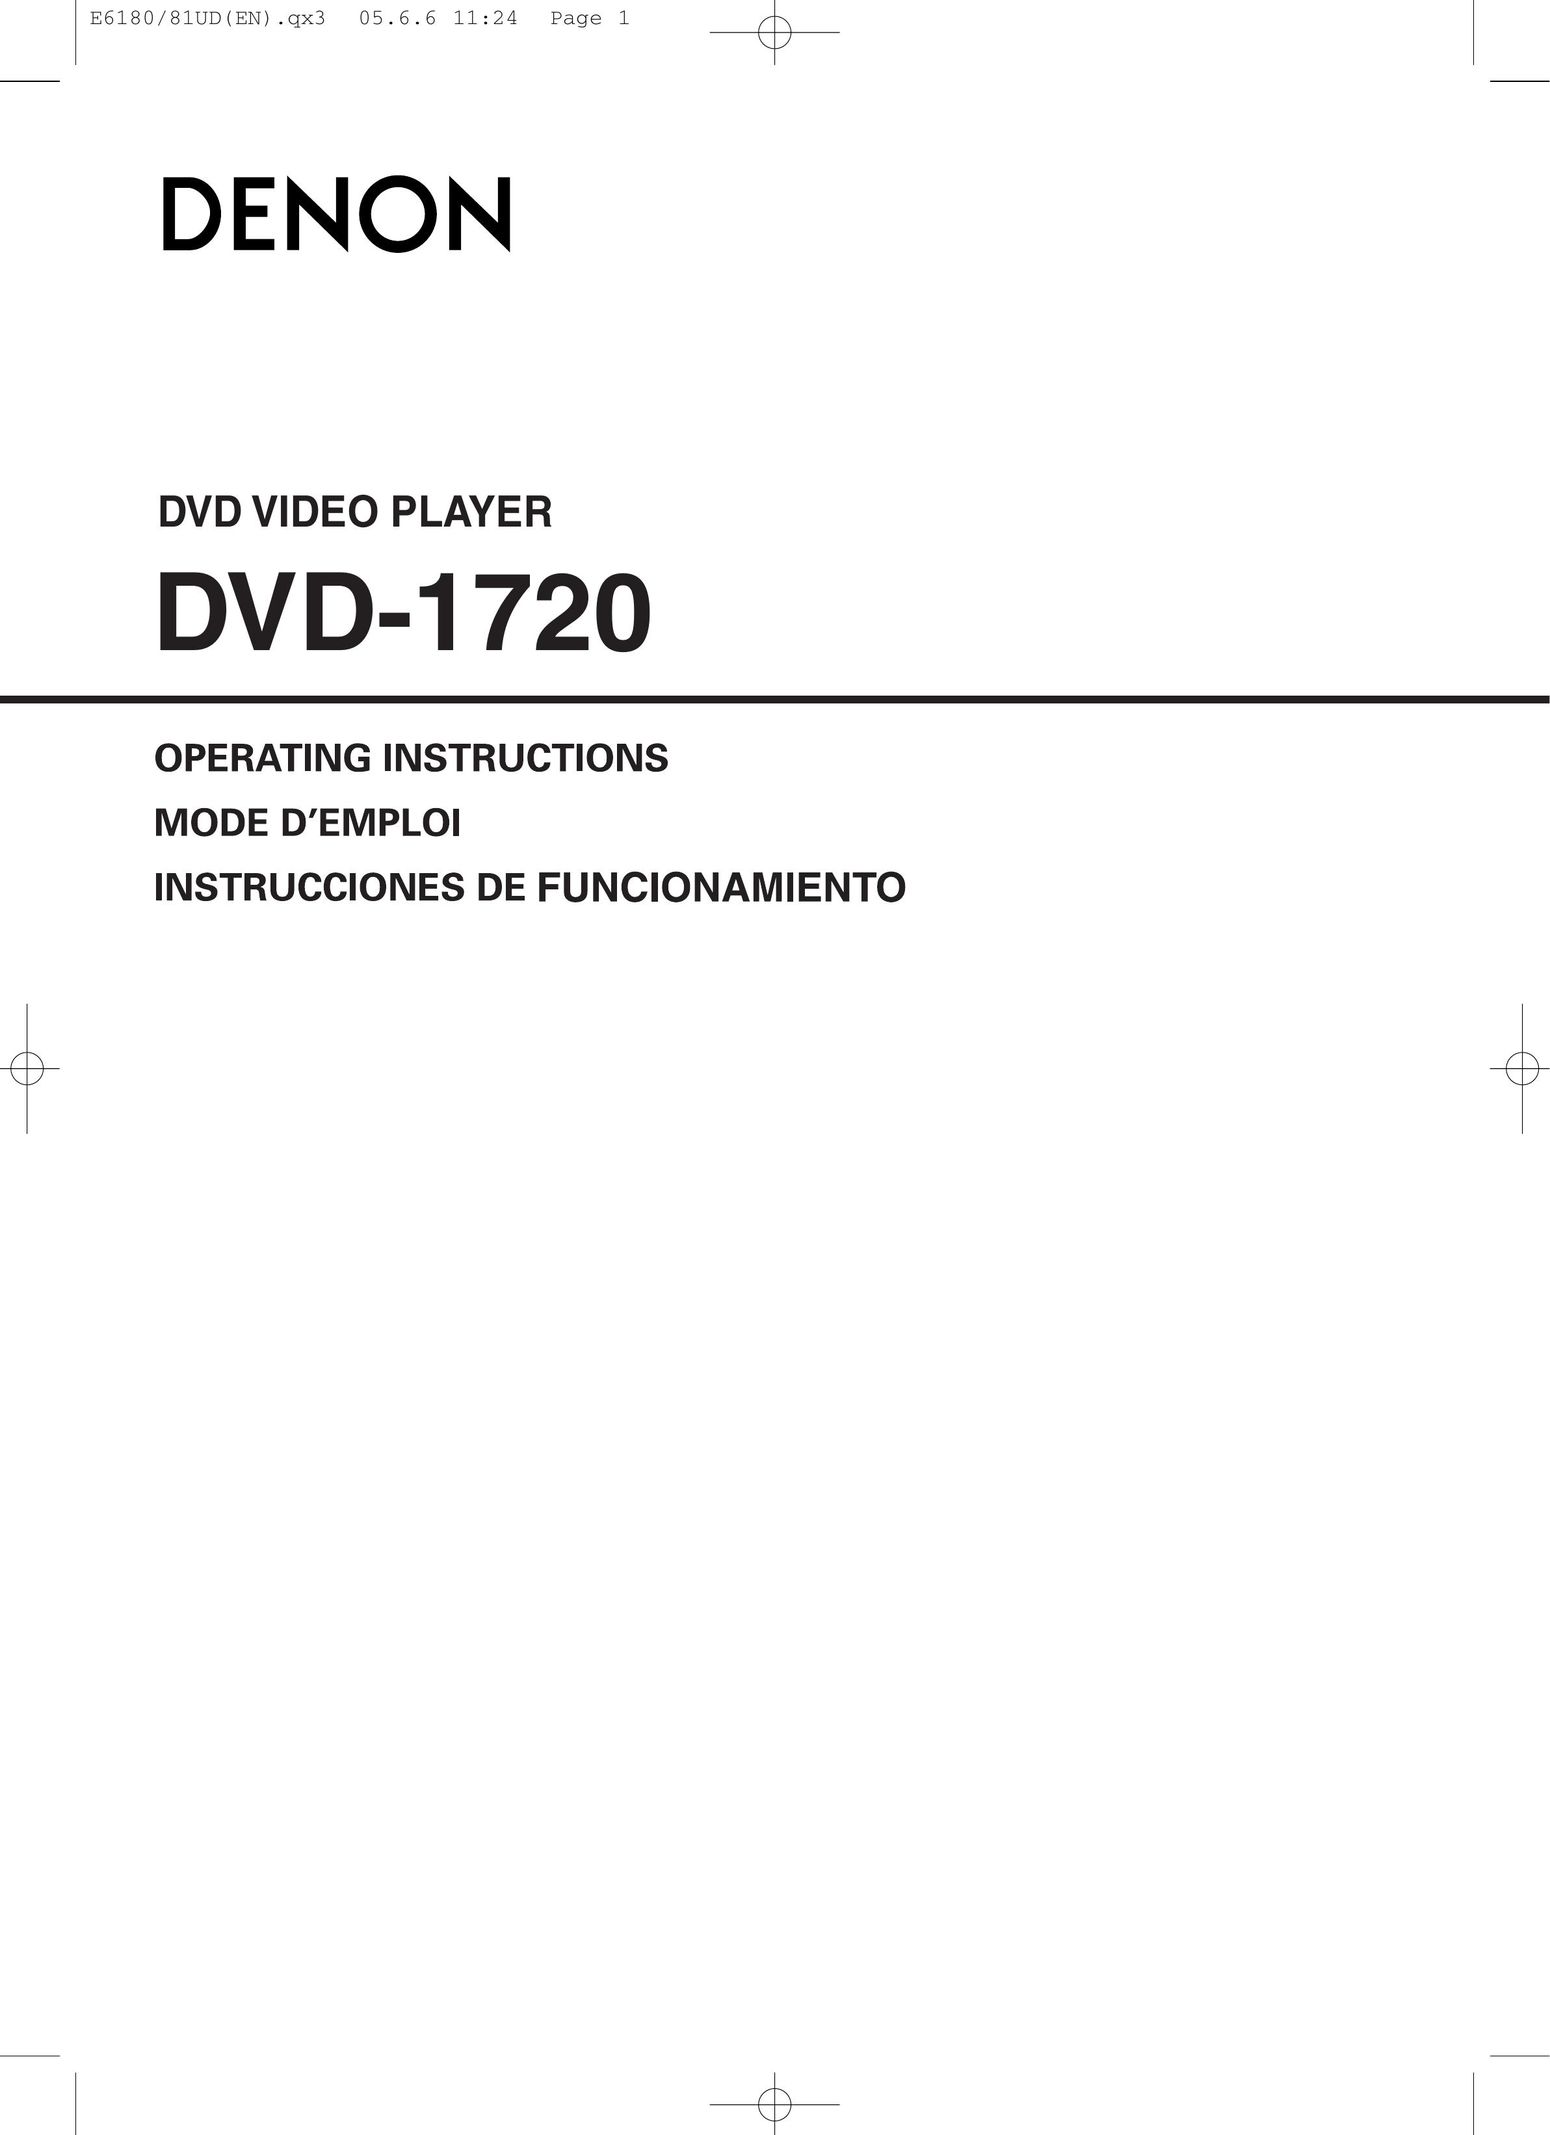 Denon DVD-1720 DVD Player User Manual